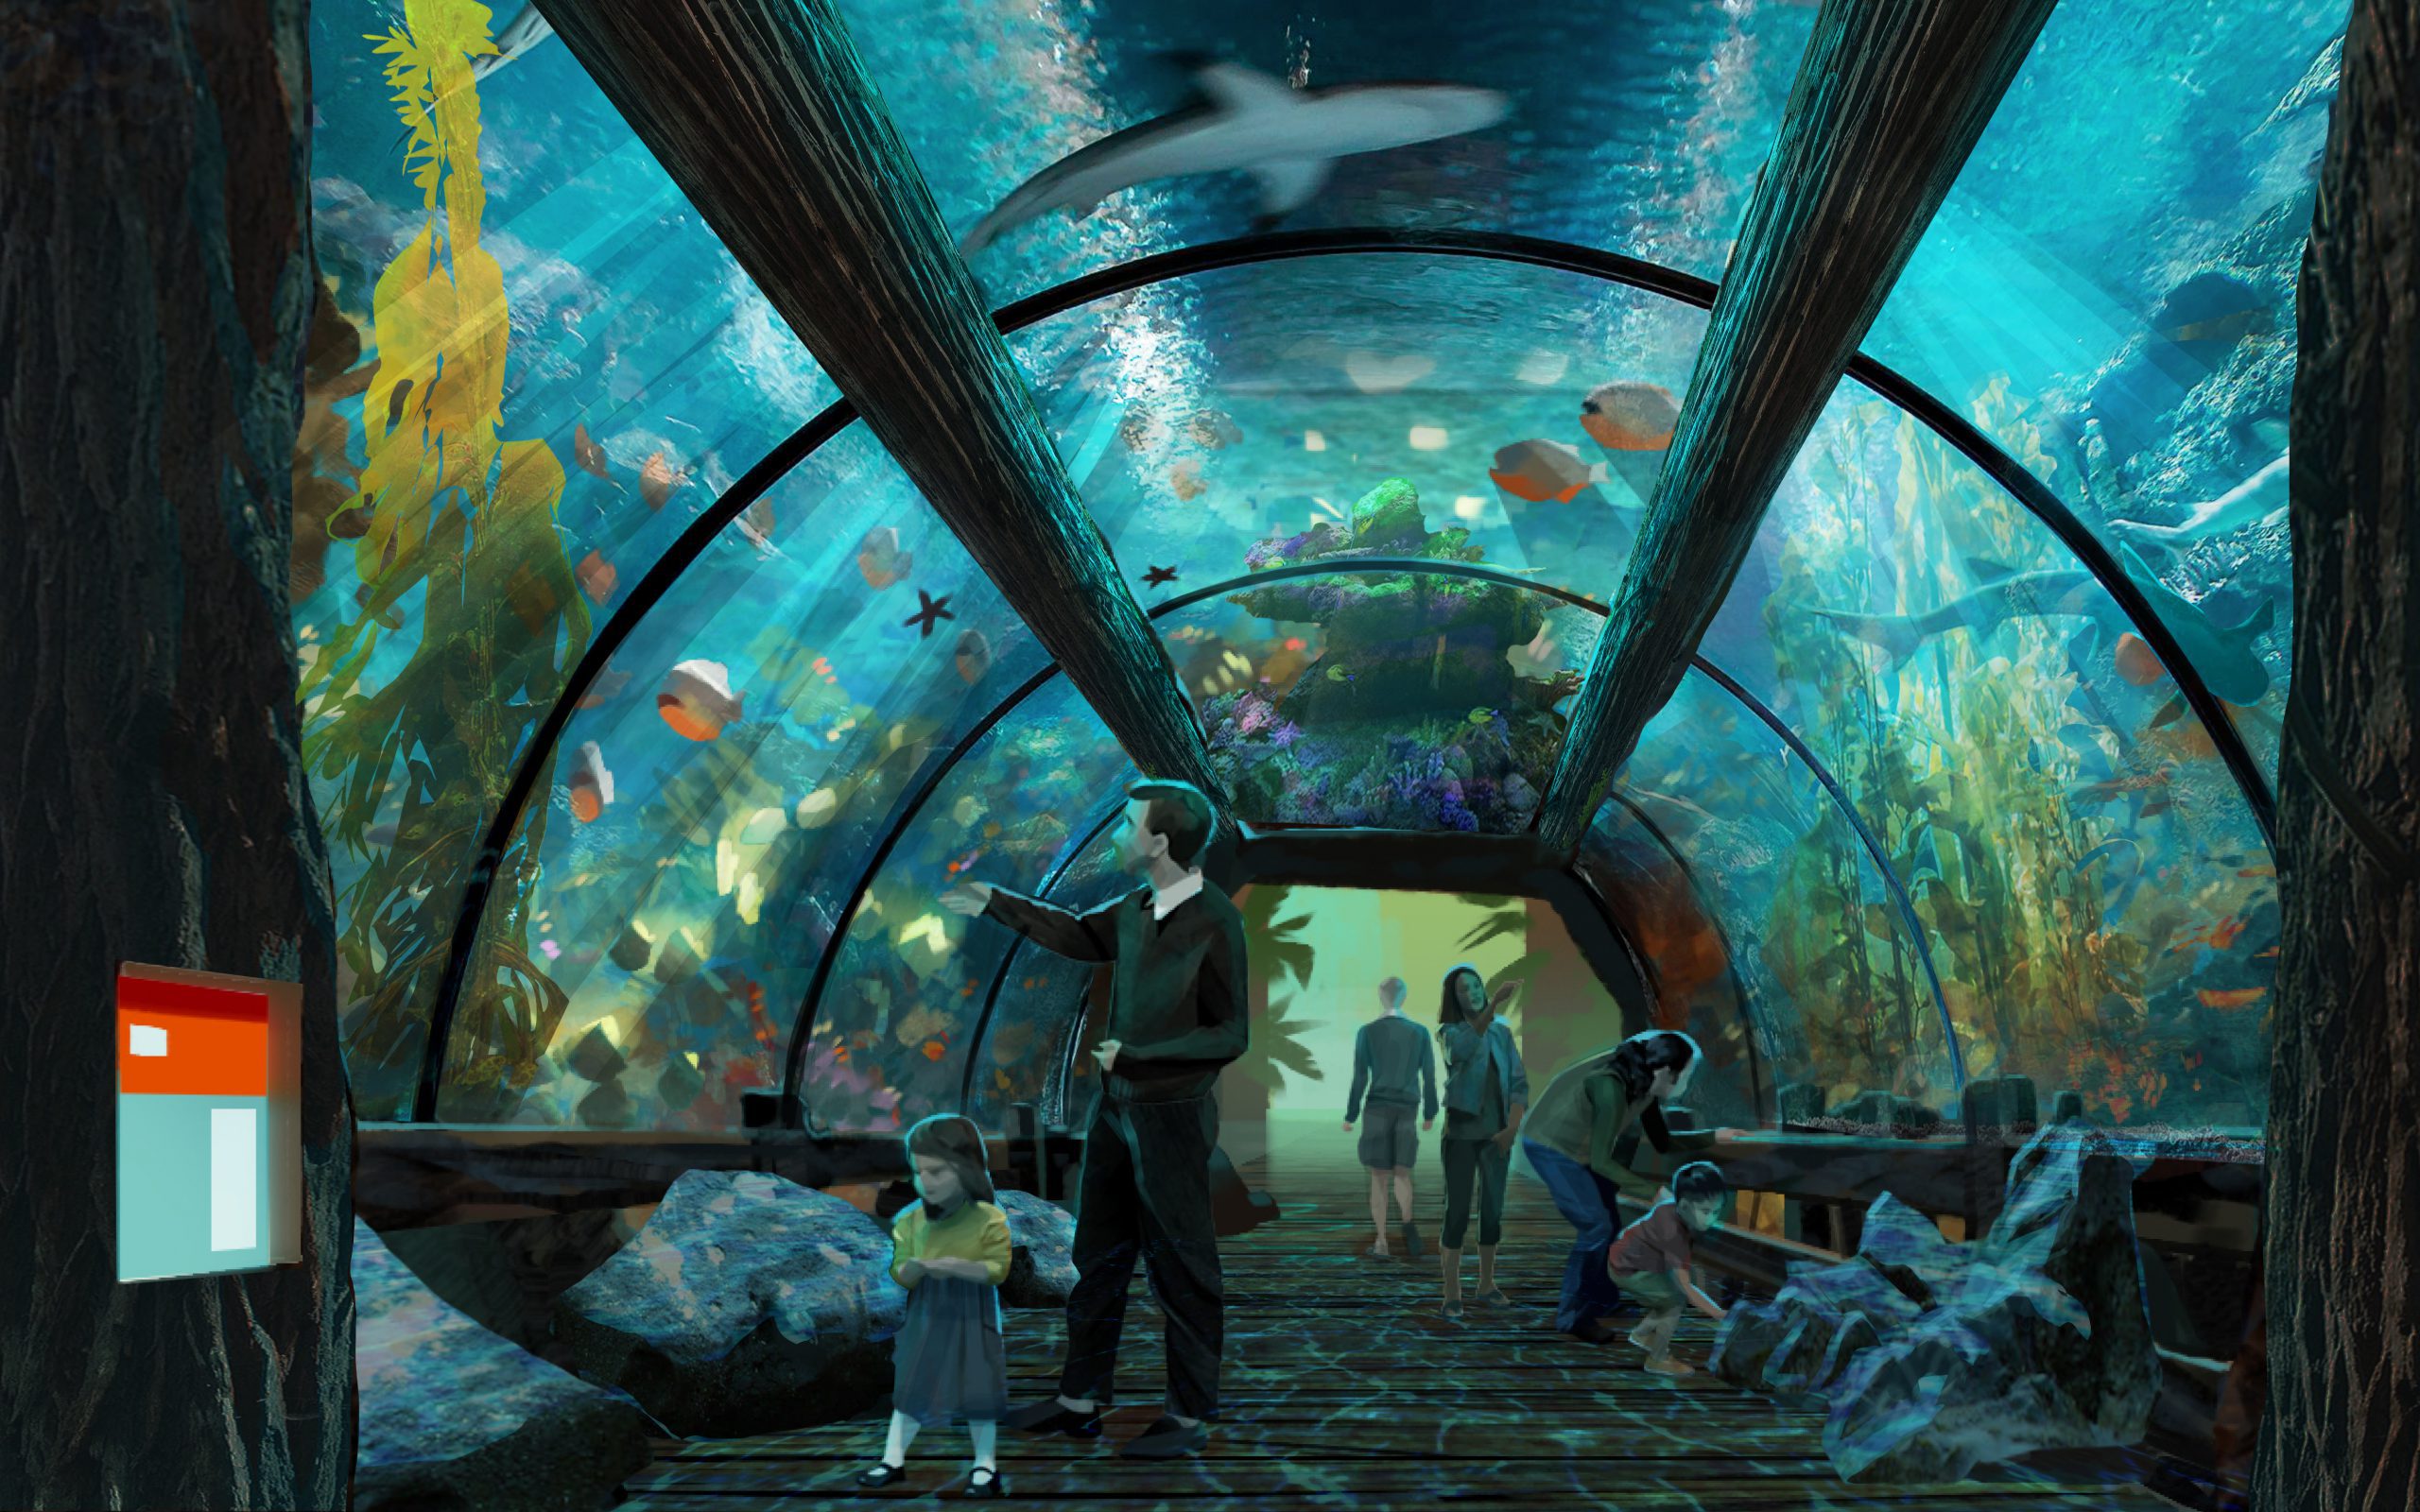 Walk through fish tunnel